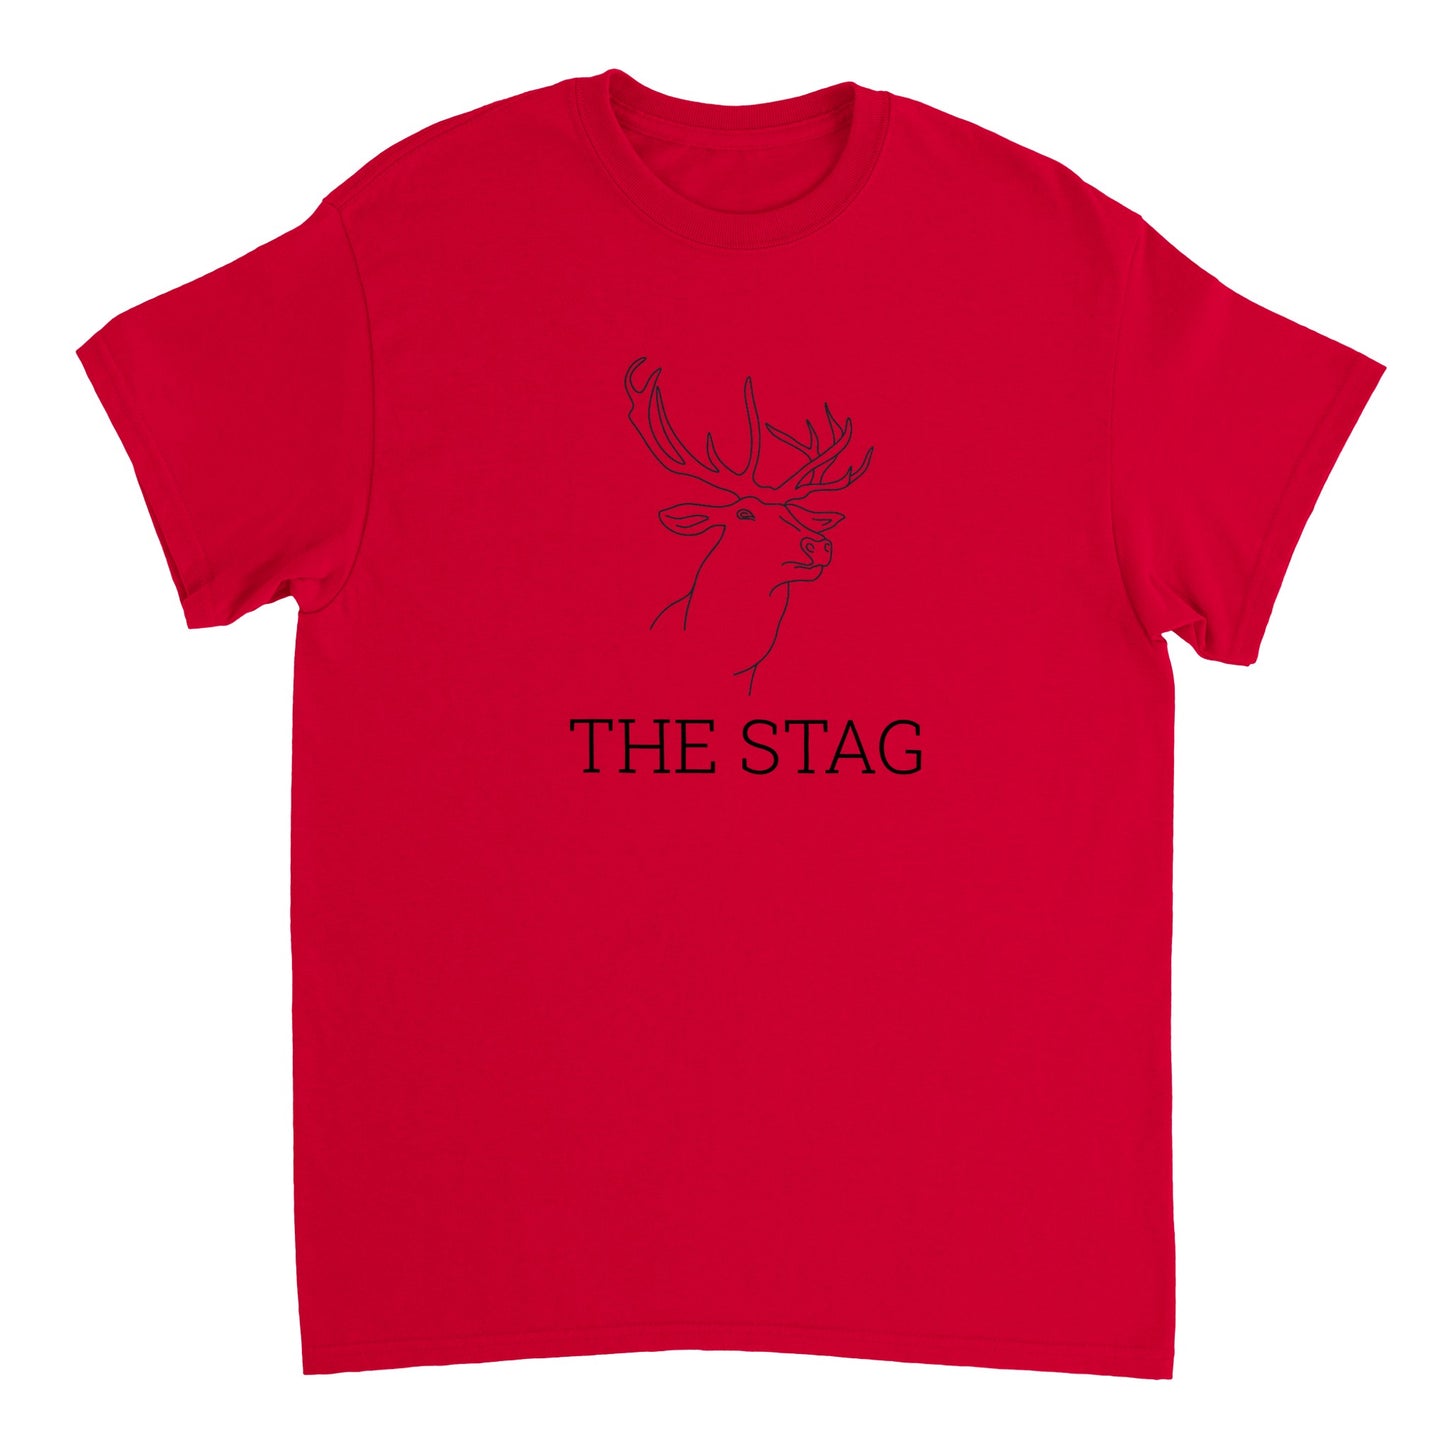 T-skjorte - "The stag" minimalistisk